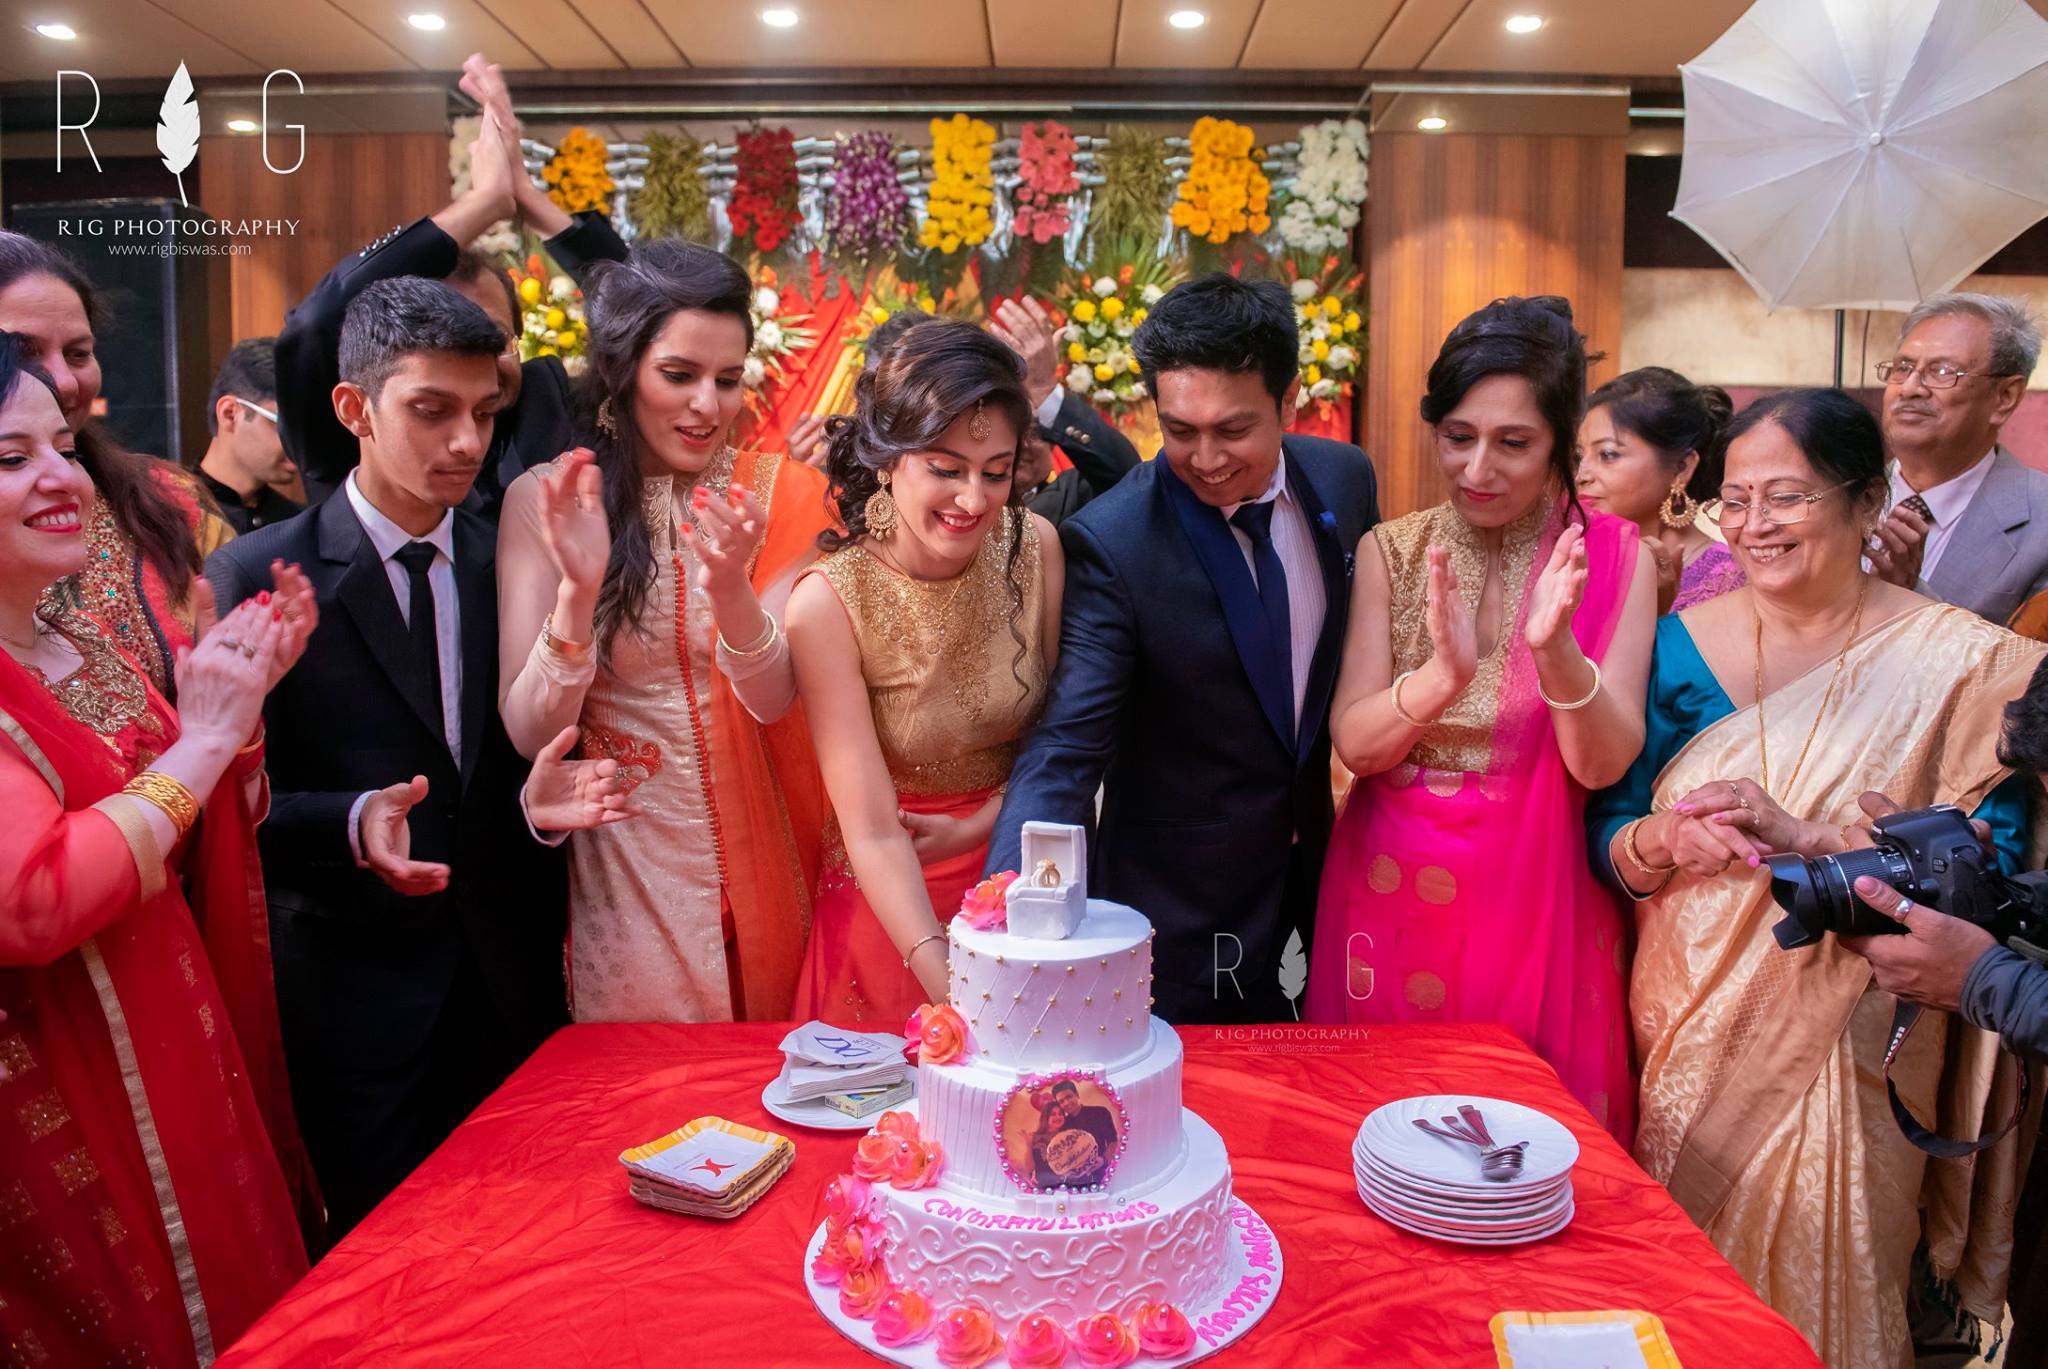 Ring Exchange Wedding Cake | Same Day Cake Delivery | Winni | Winni.in